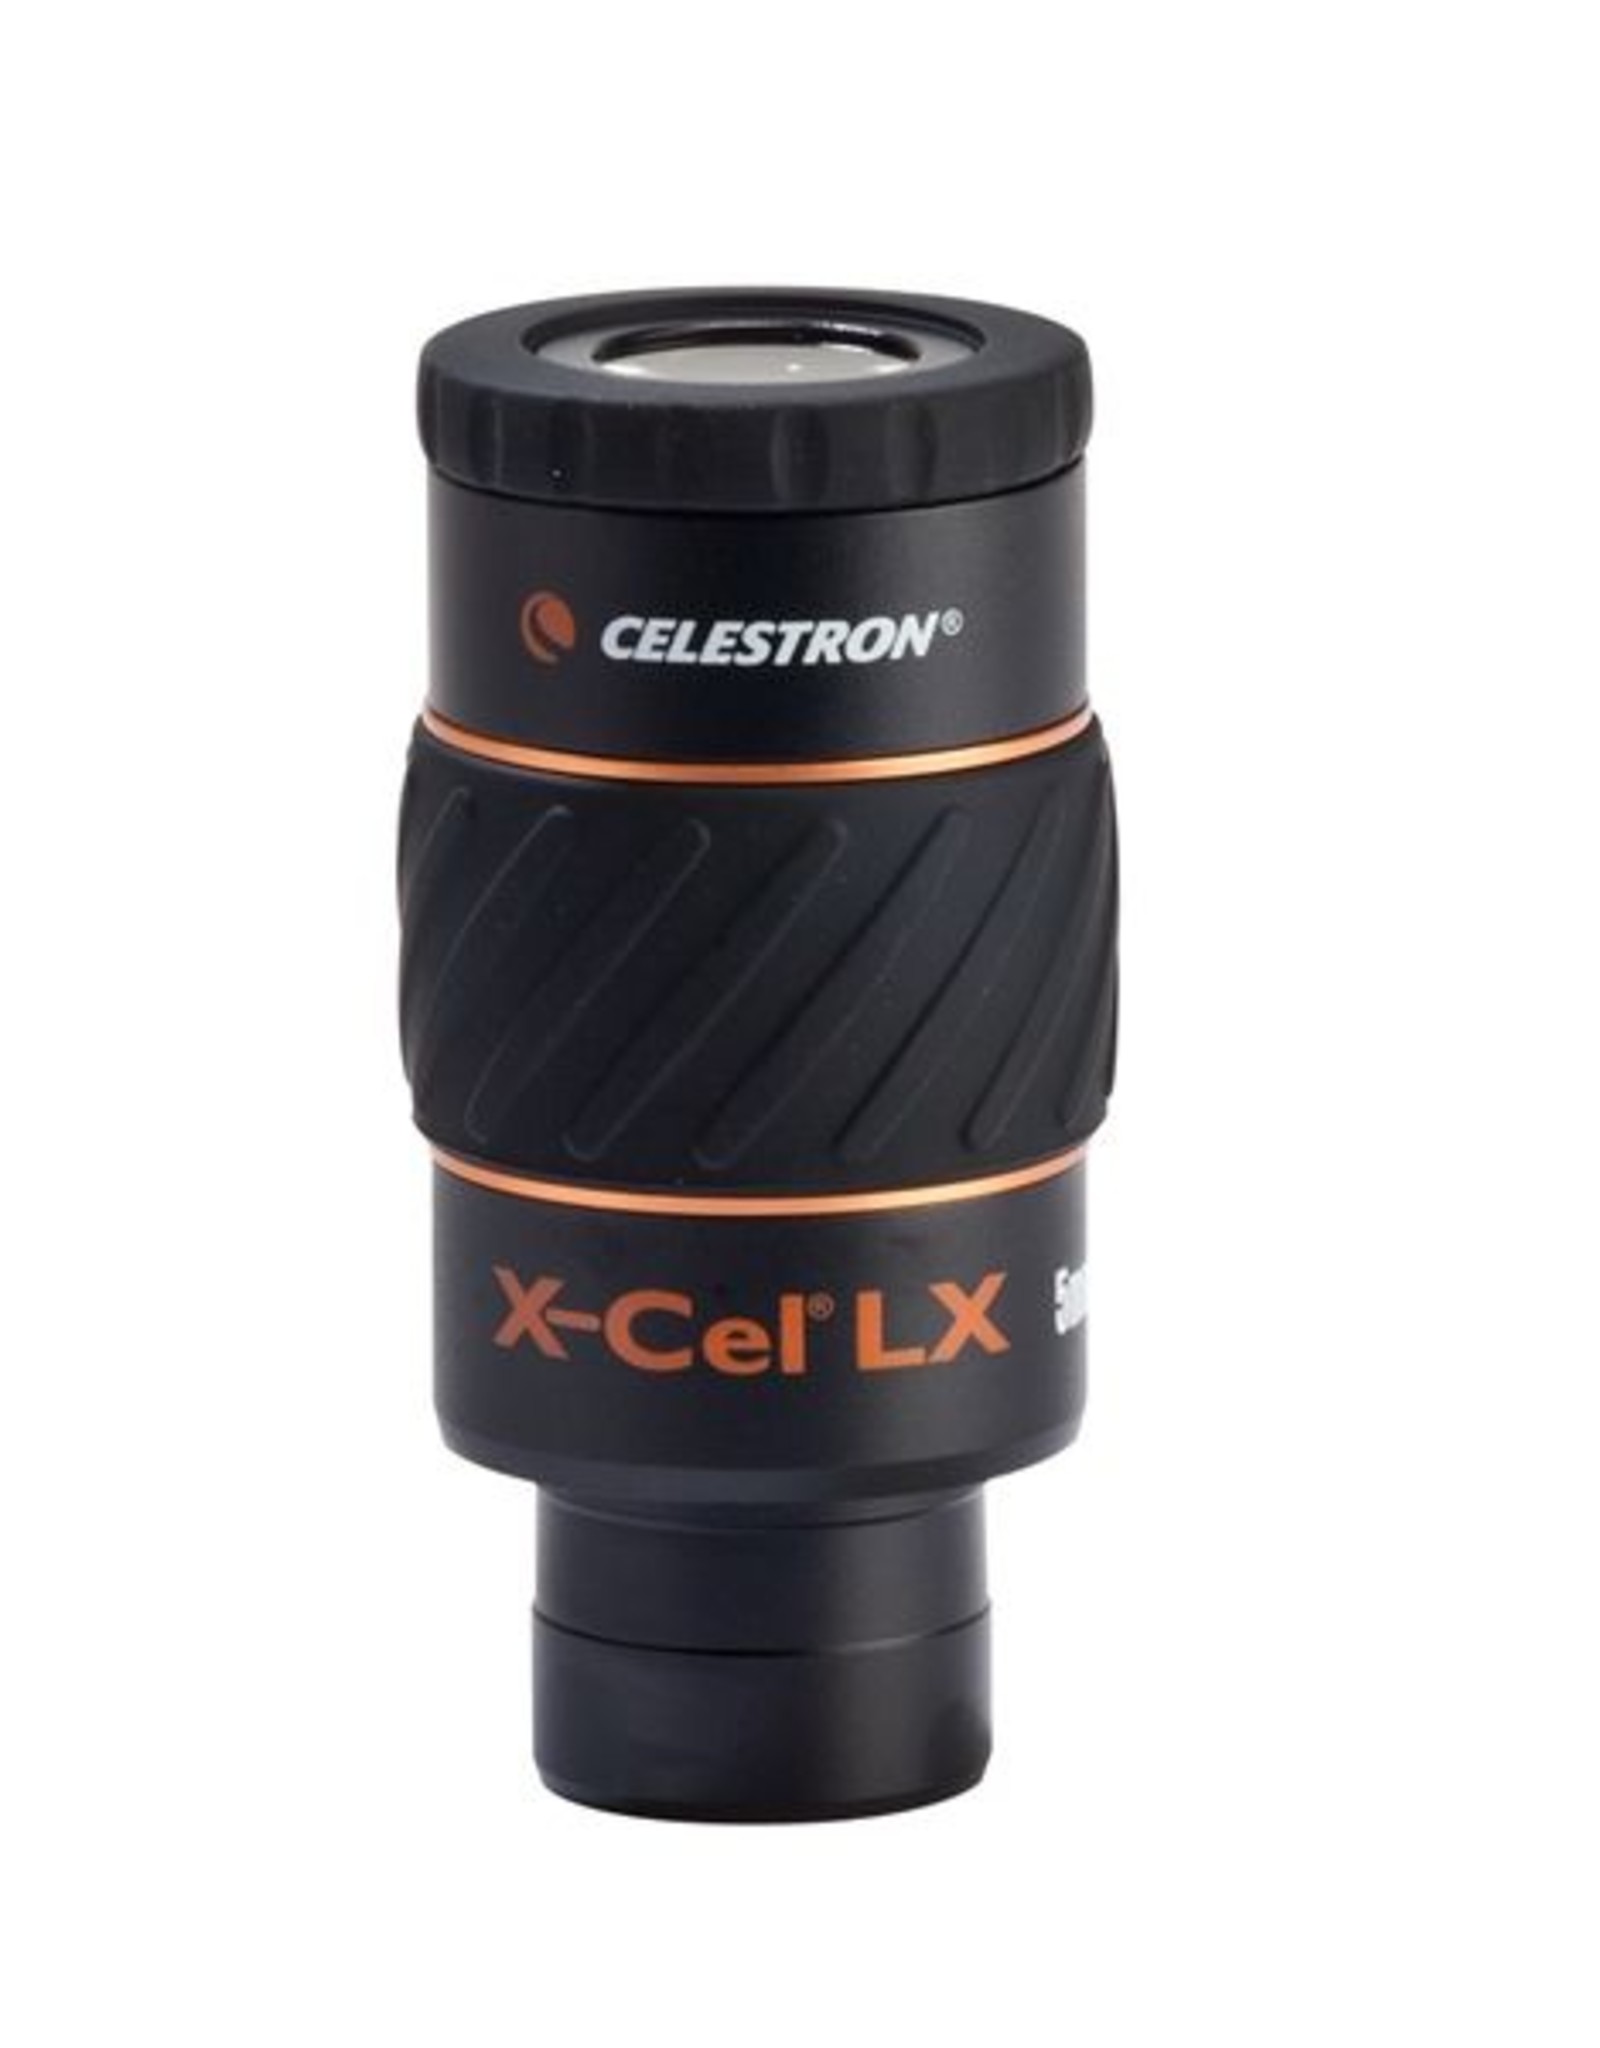 Celestron Celestron X-Cel LX 5 mm Eyepiece